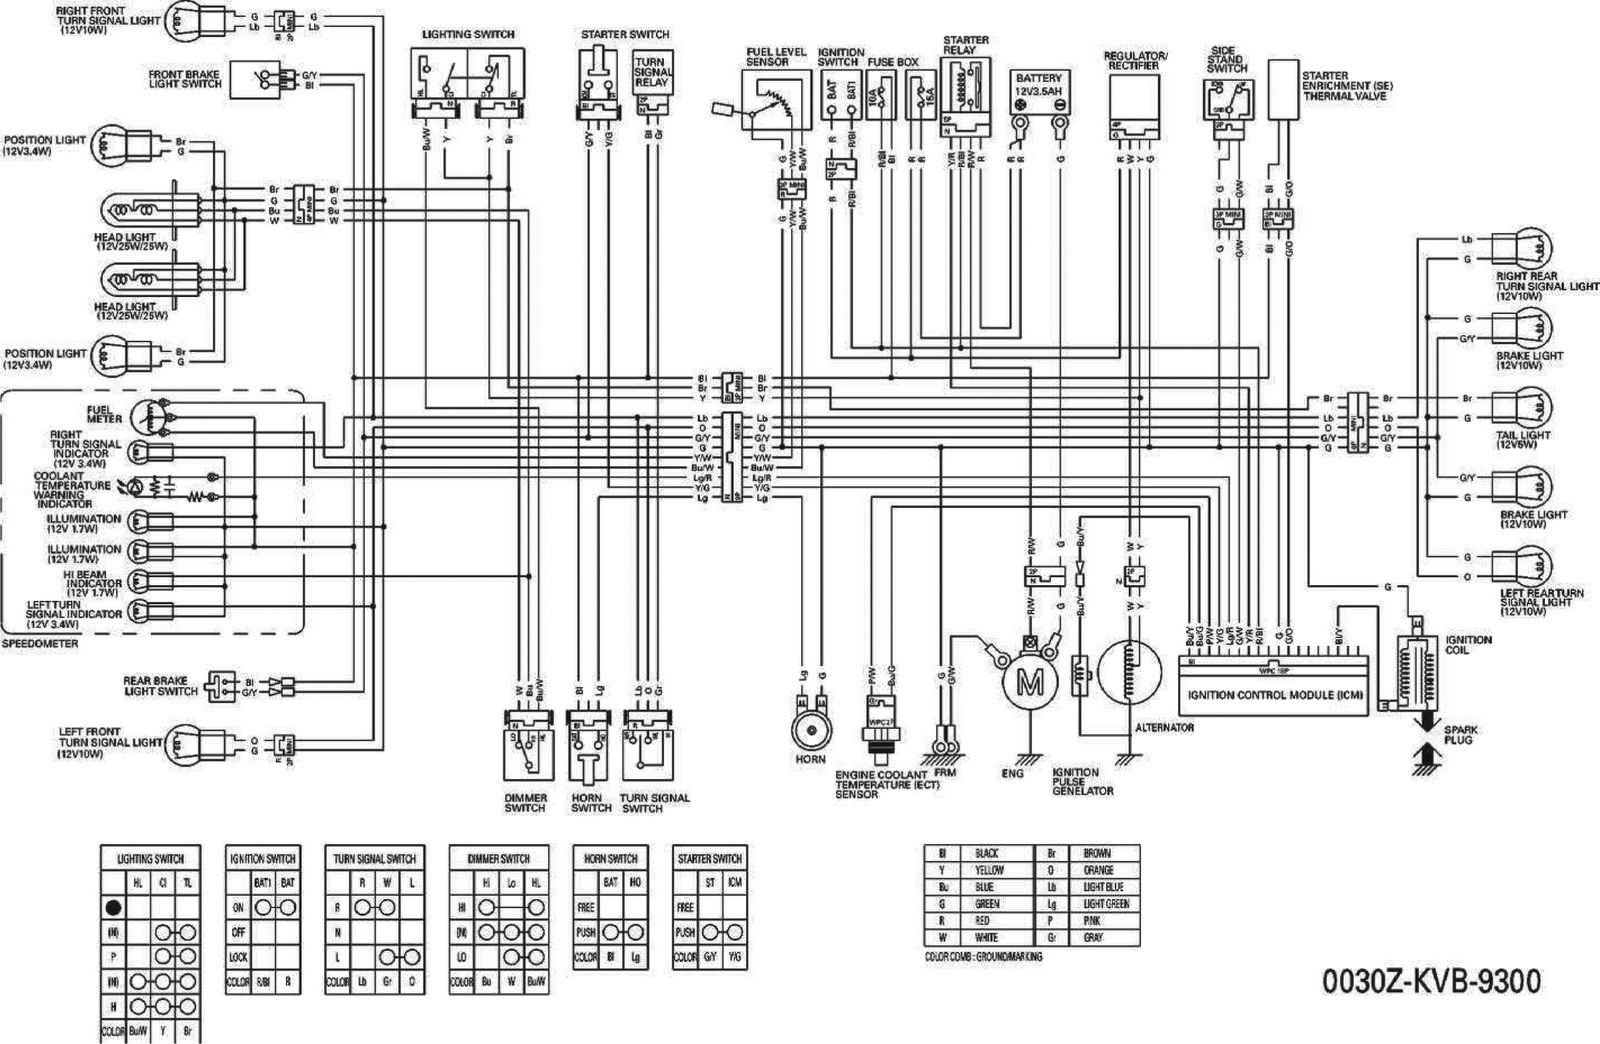 Diagram Kelistrikan Honda Vario CBS x tra motor 